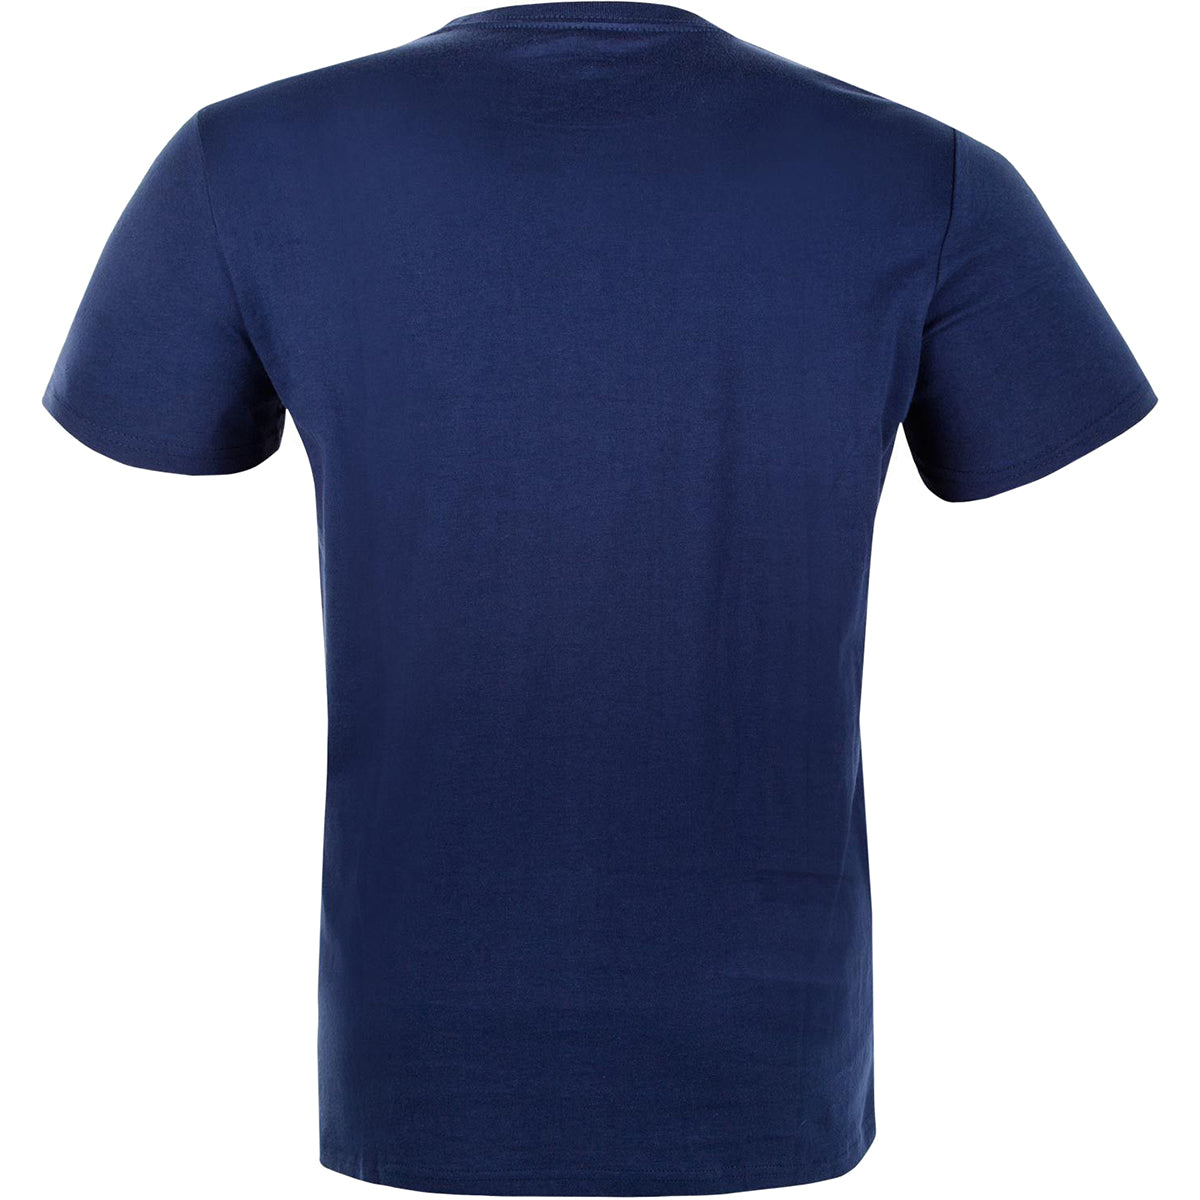 Venum Kids Classic Short Sleeve T-Shirt - Navy Blue Venum